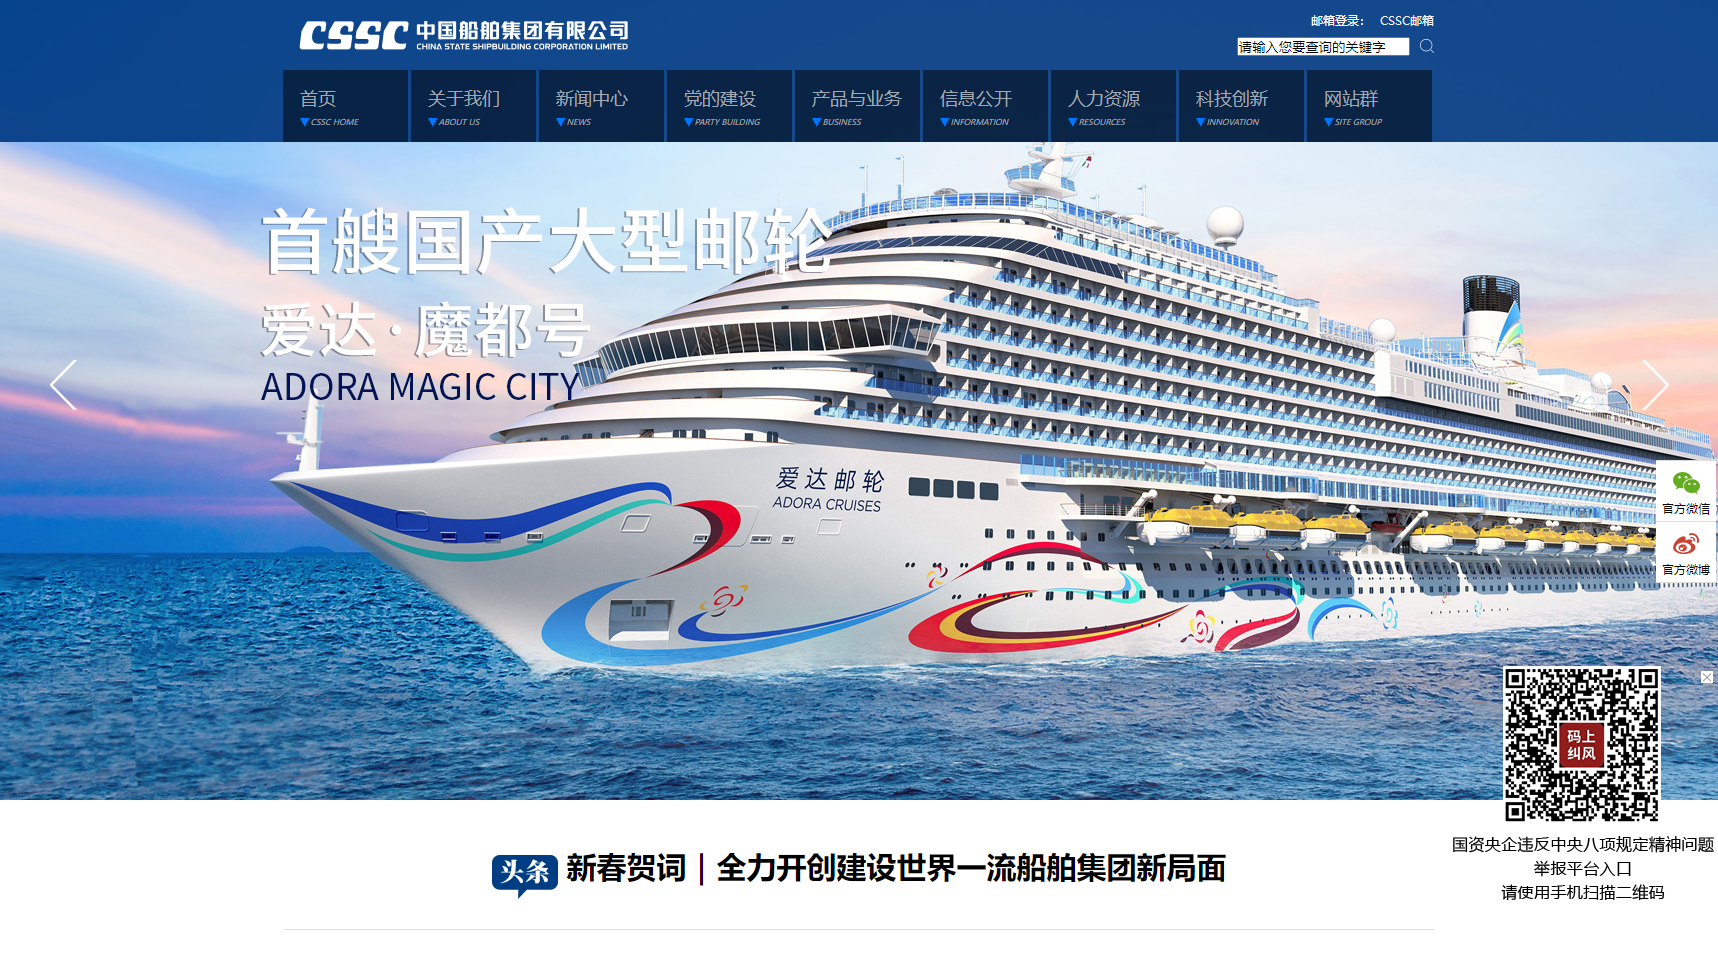 China State Shipbuilding Corporation (CSSC) - Vessel Manufacturer